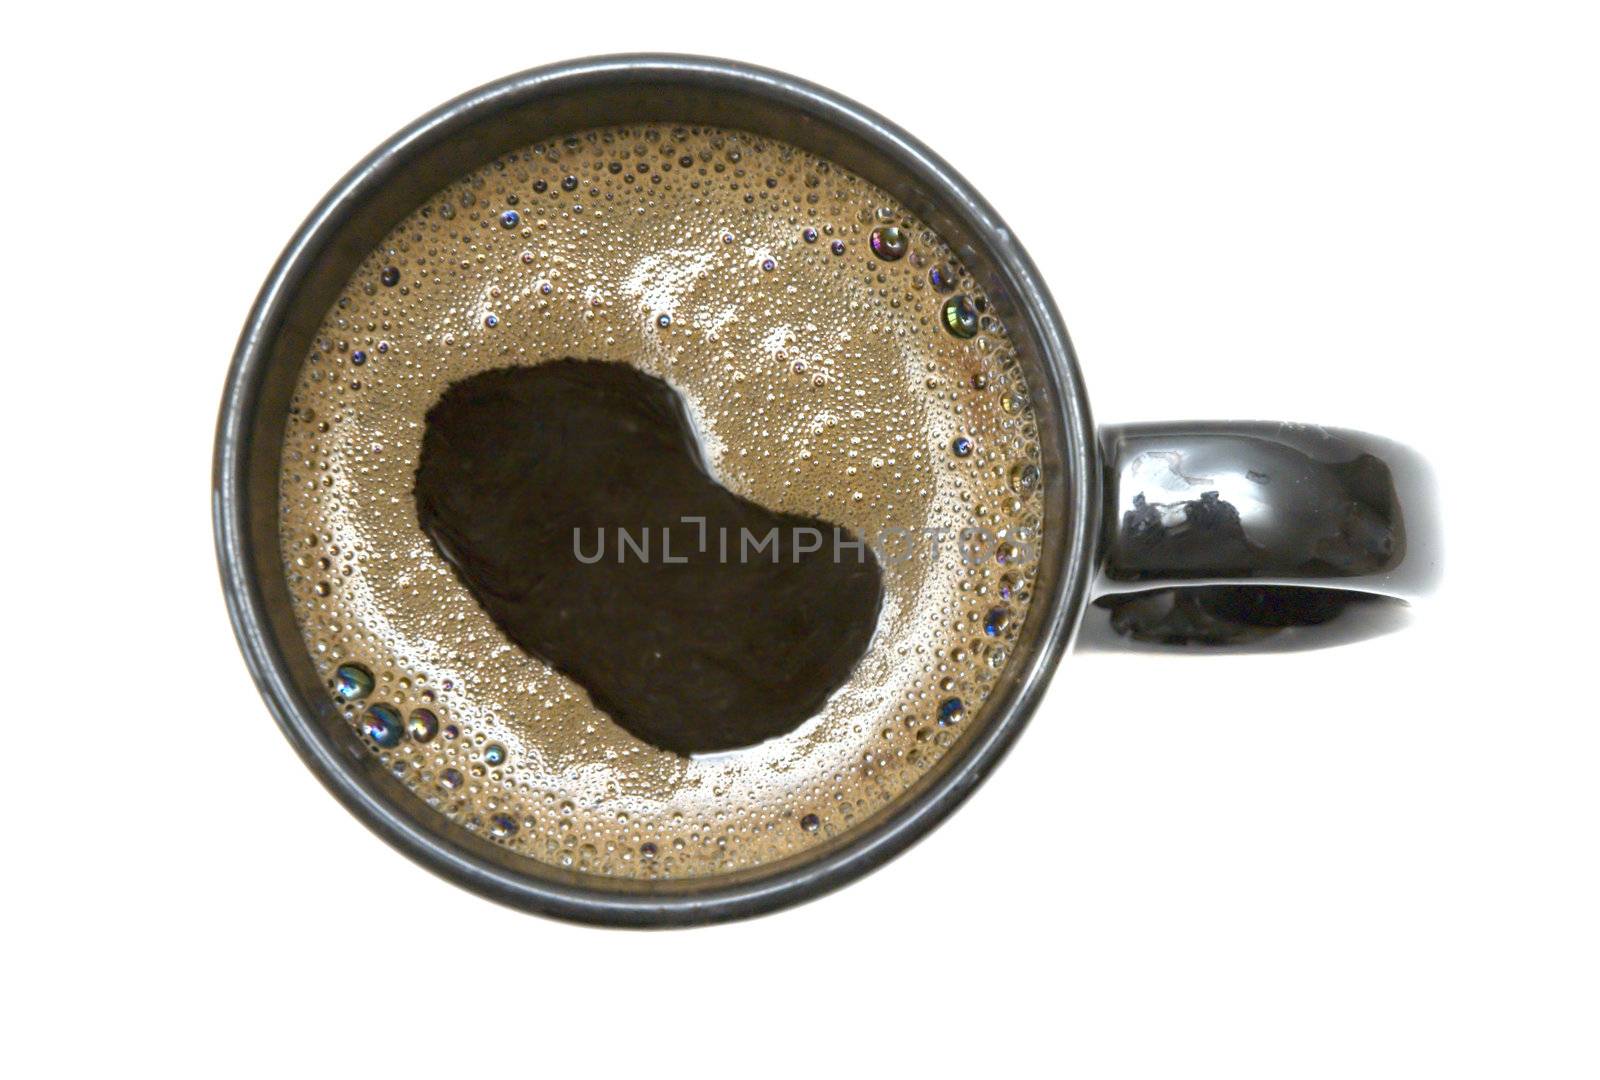 coffee cup by semenovp